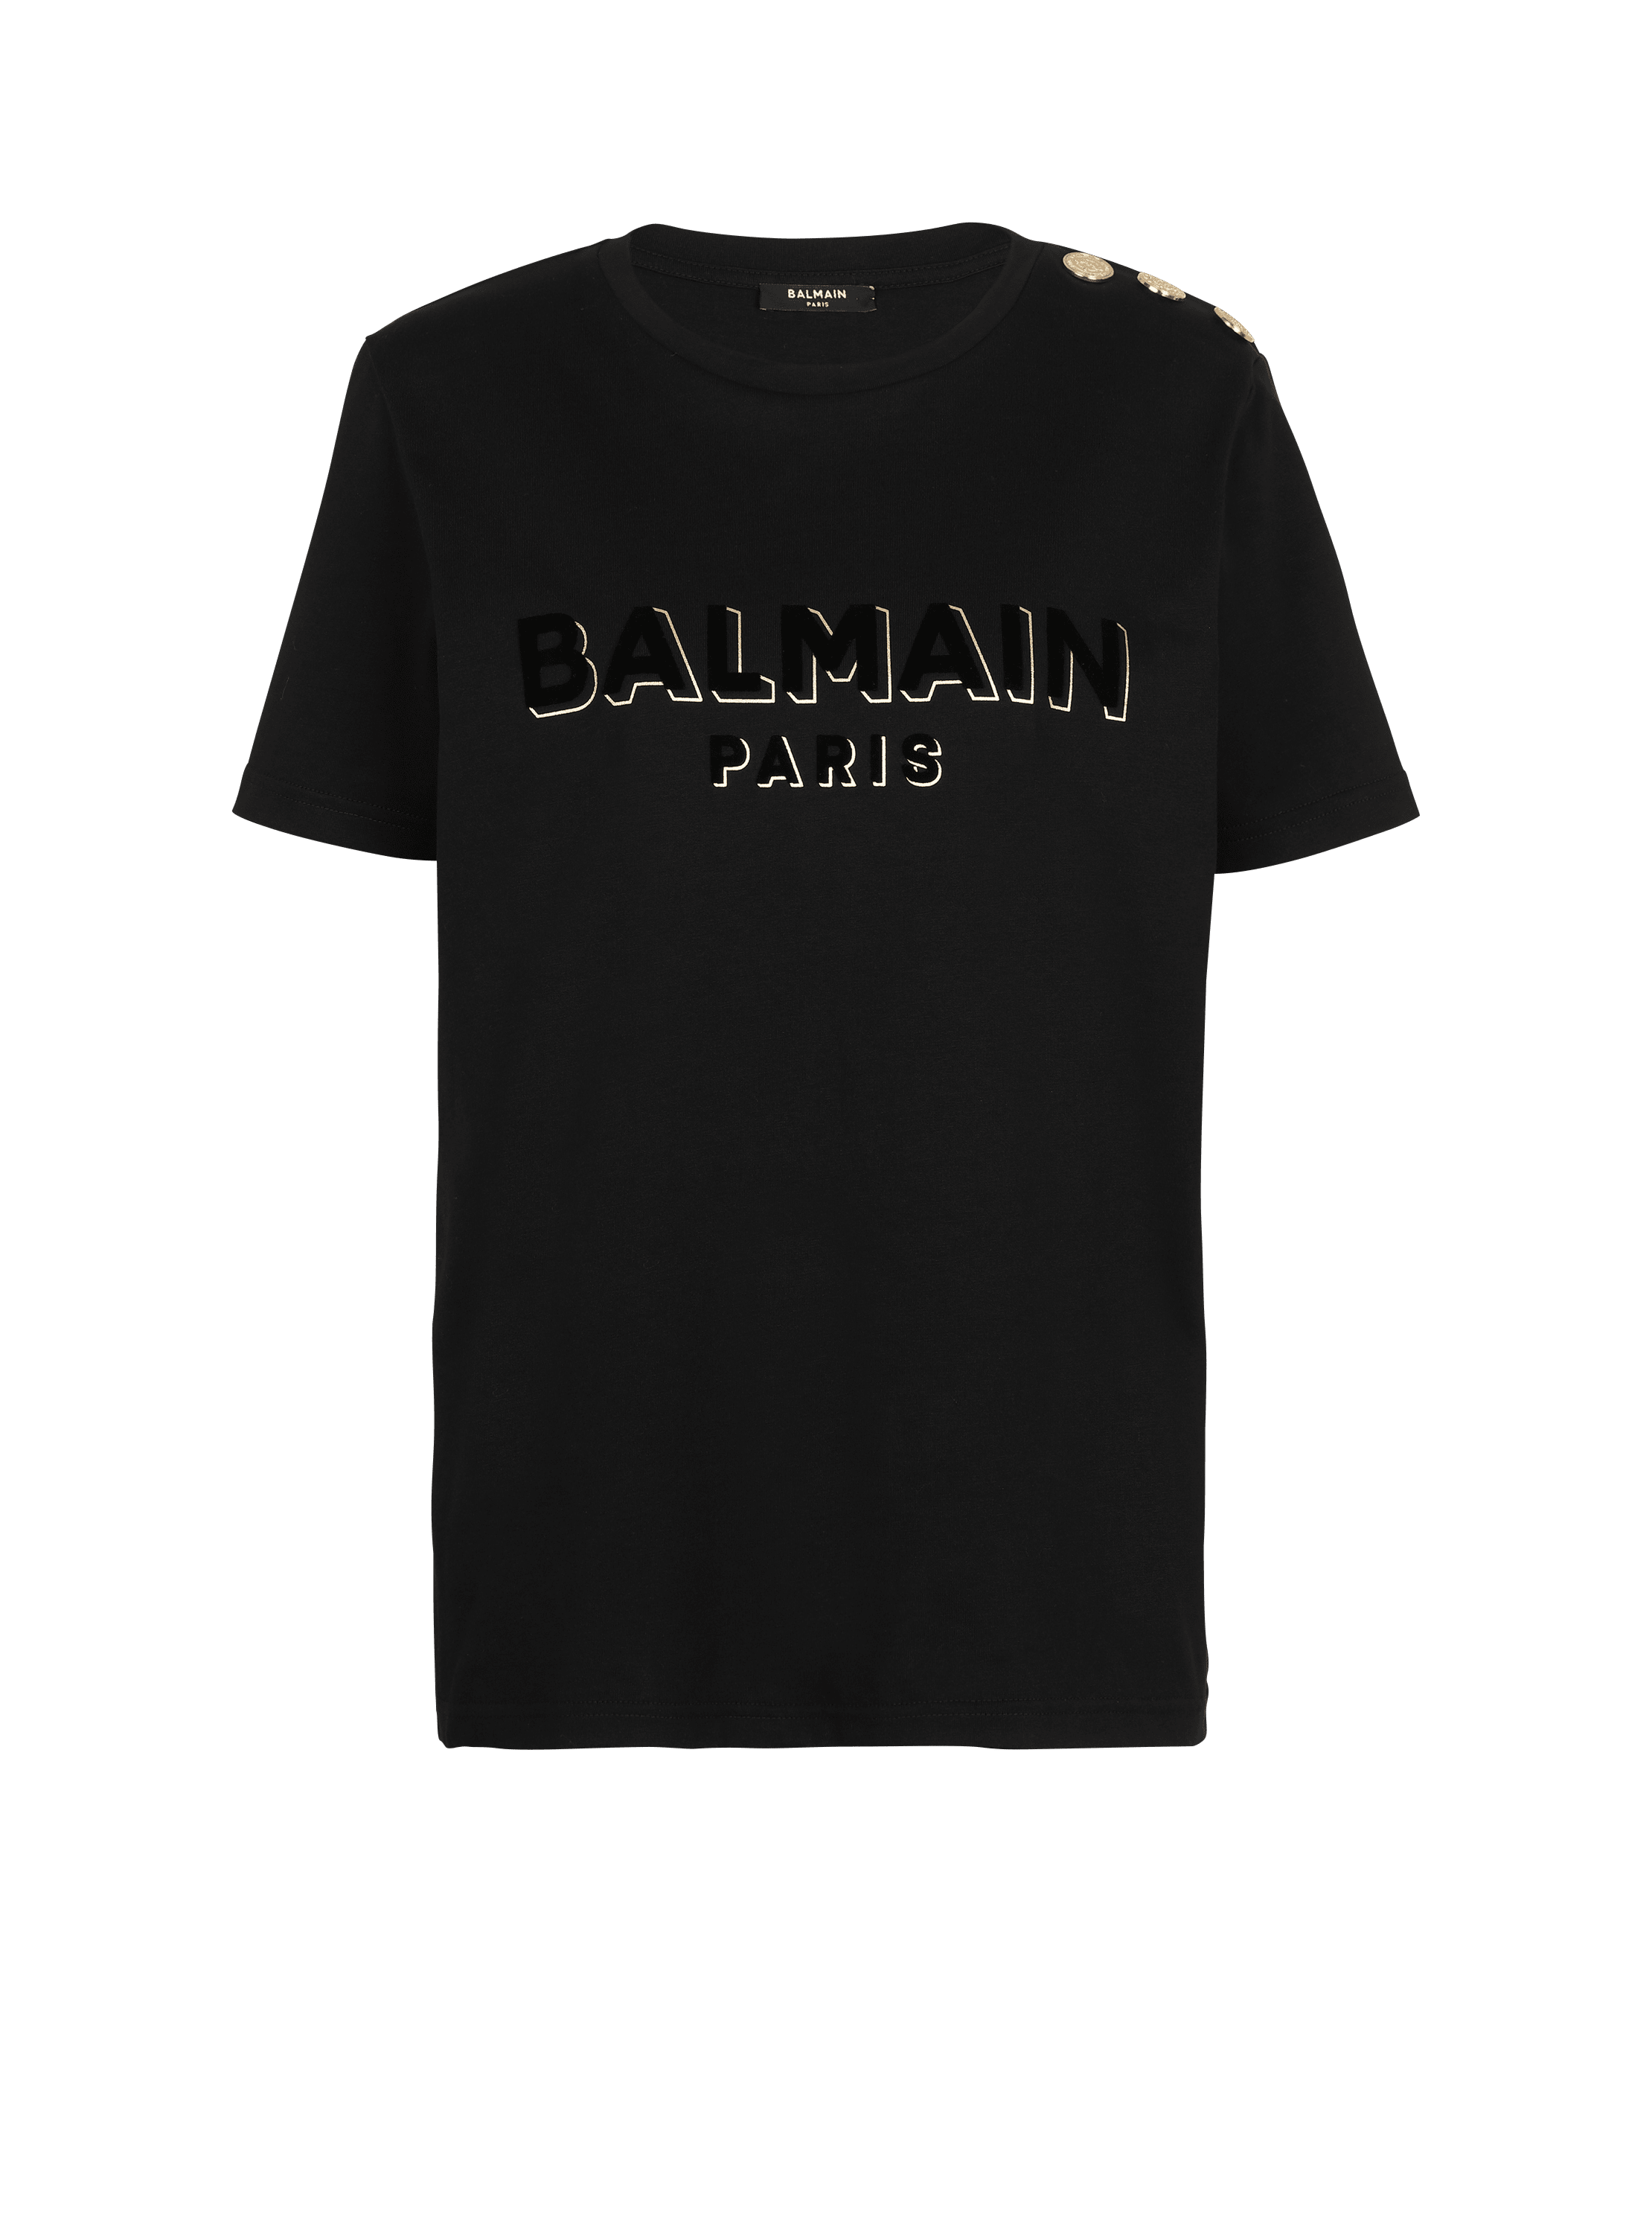 Cotton T-shirt with flocked metallic Balmain logo, black, hi-res